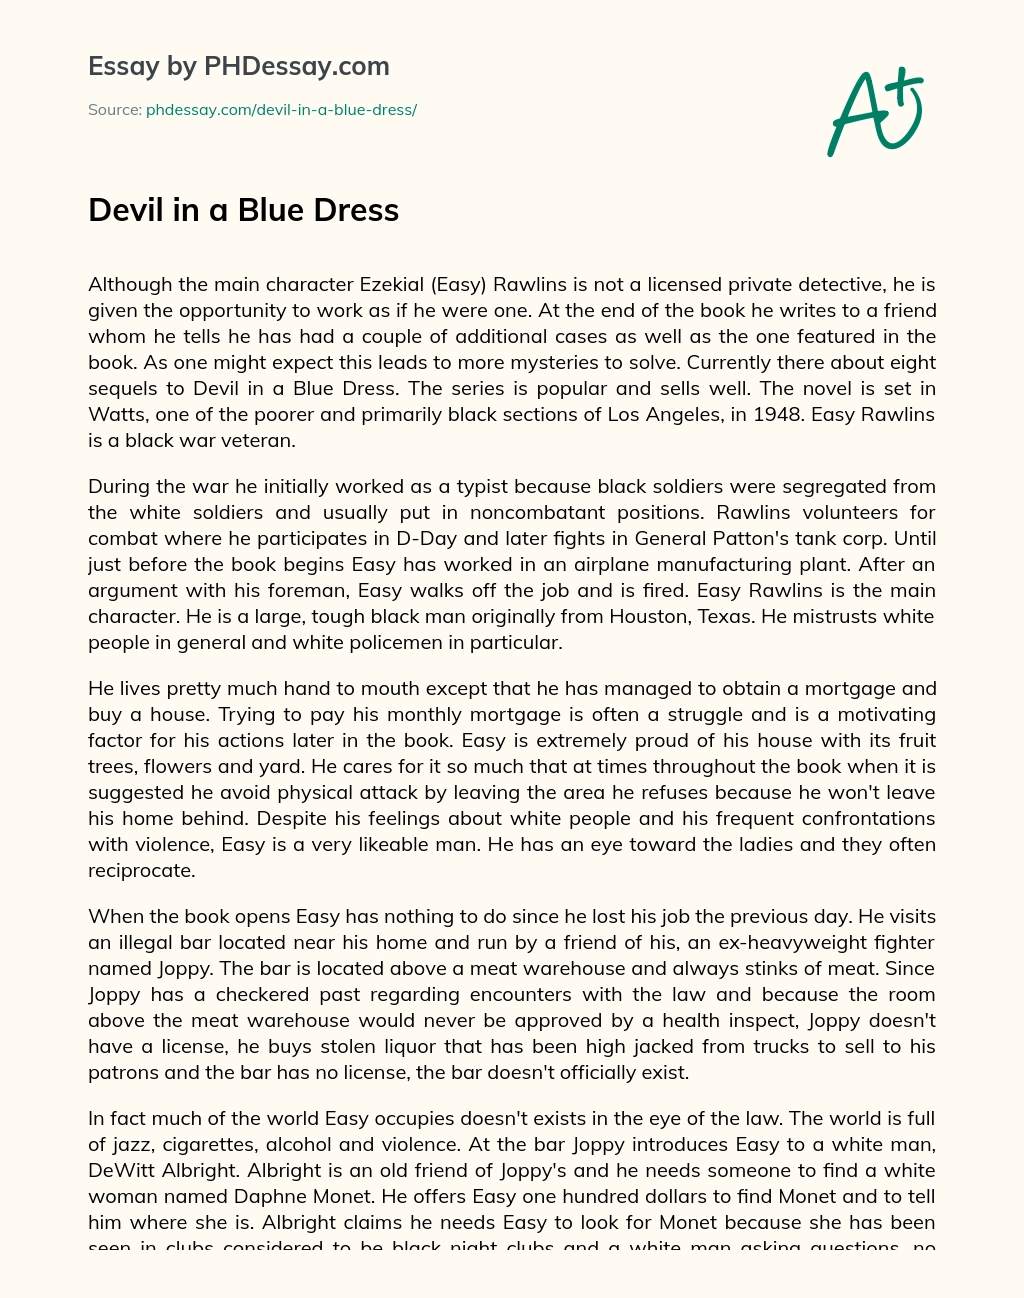 Devil in a Blue Dress essay